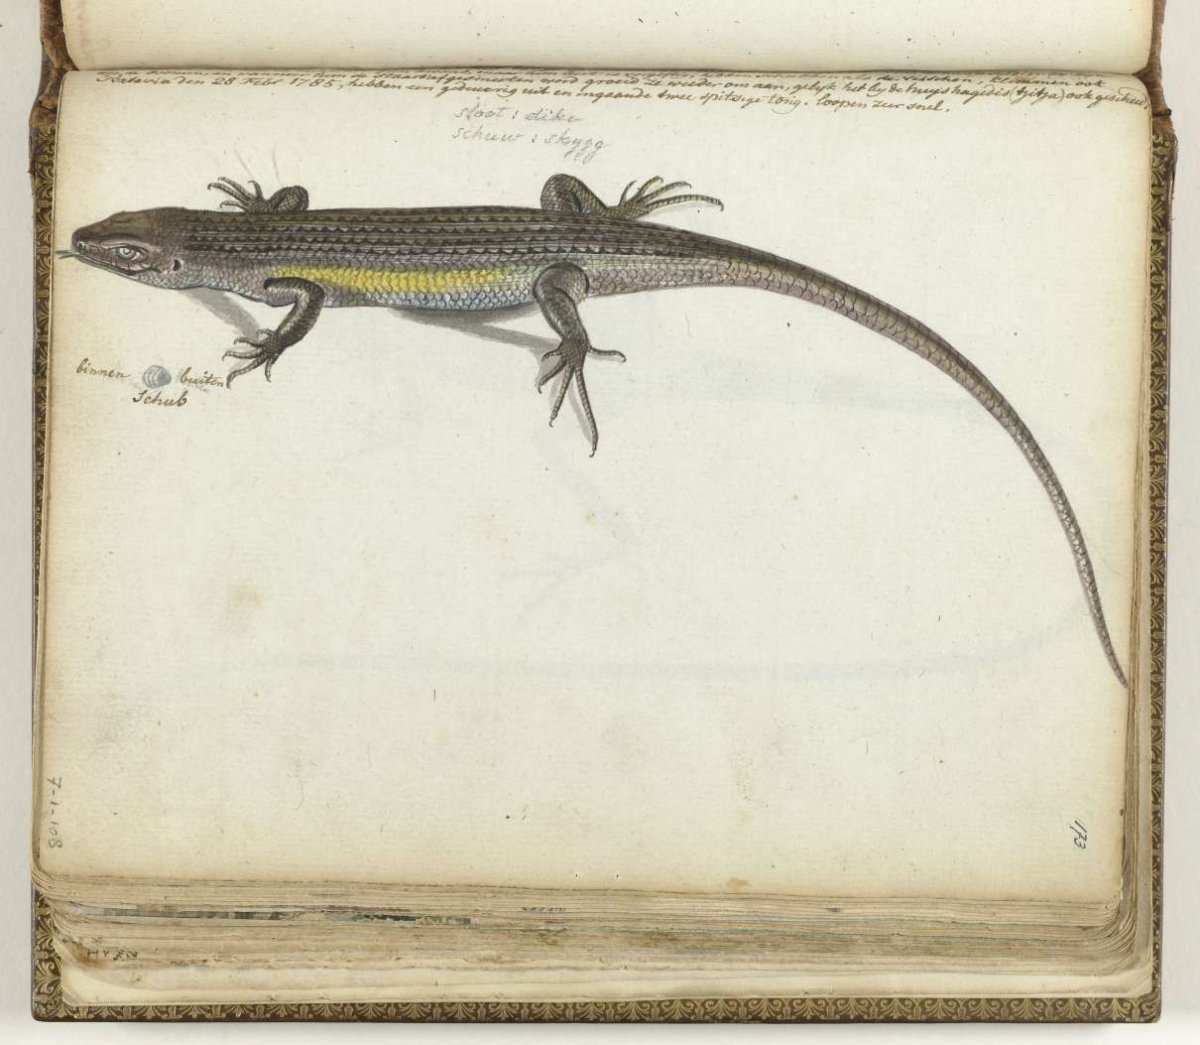 Land and water lizard, Jan Brandes, 1785